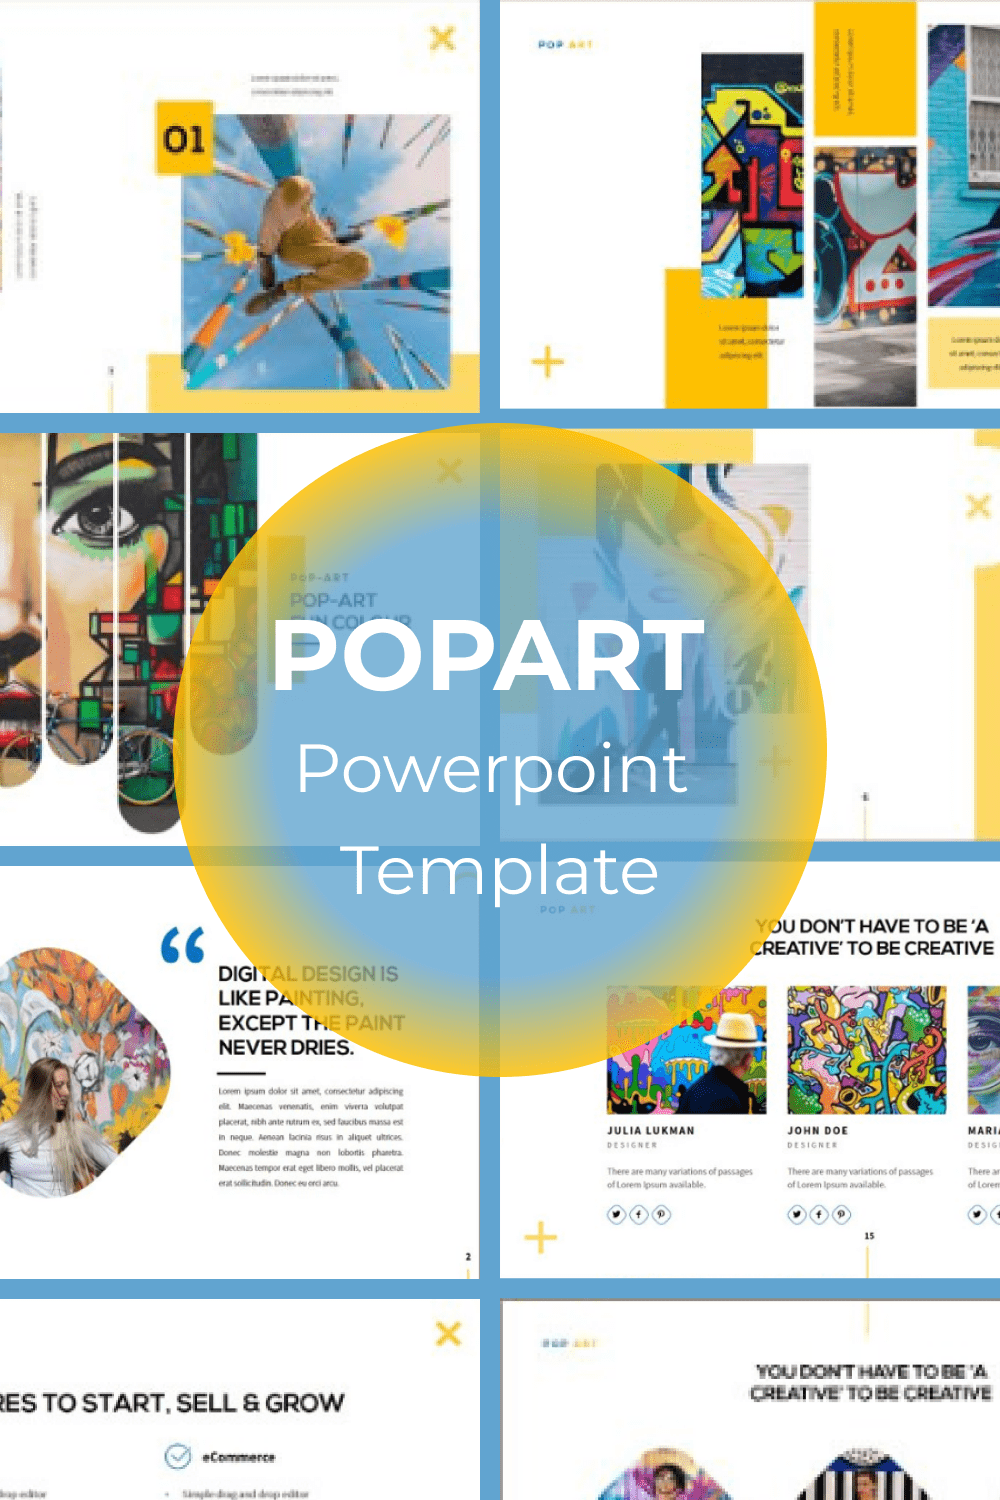 POPART Powerpoint Template Pinterest.